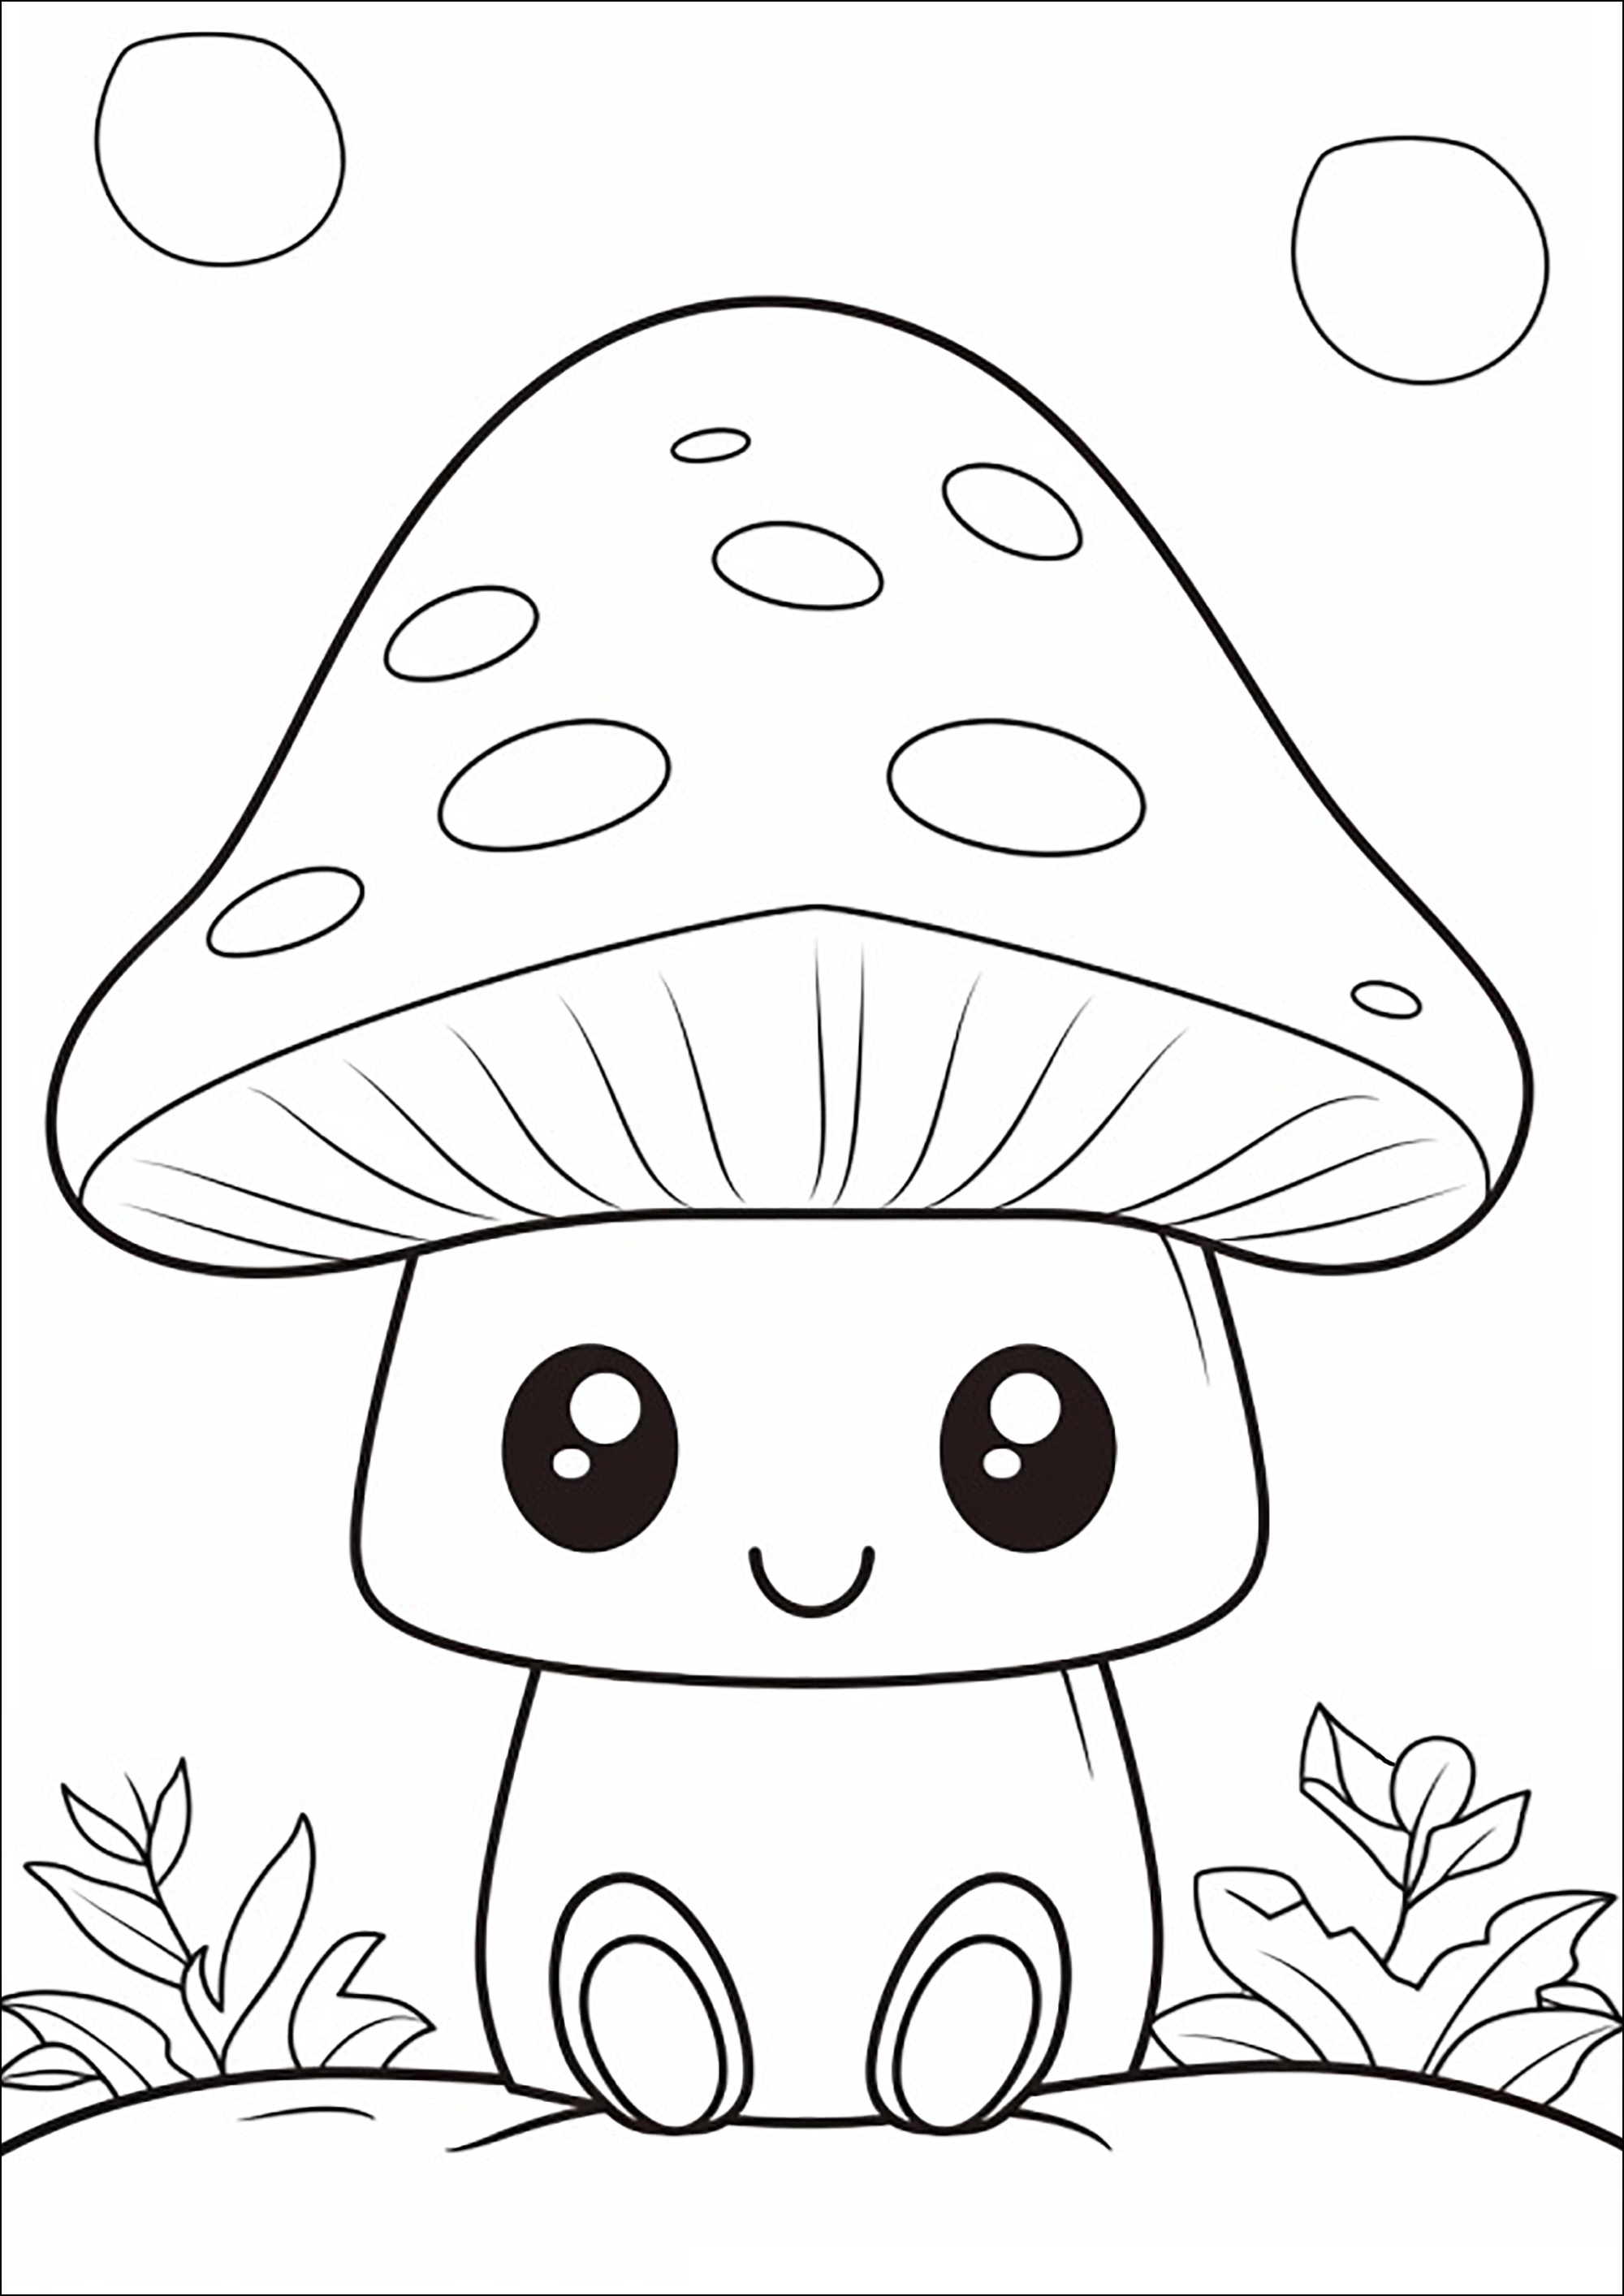 Pretty mushroom designed in Kawaii style